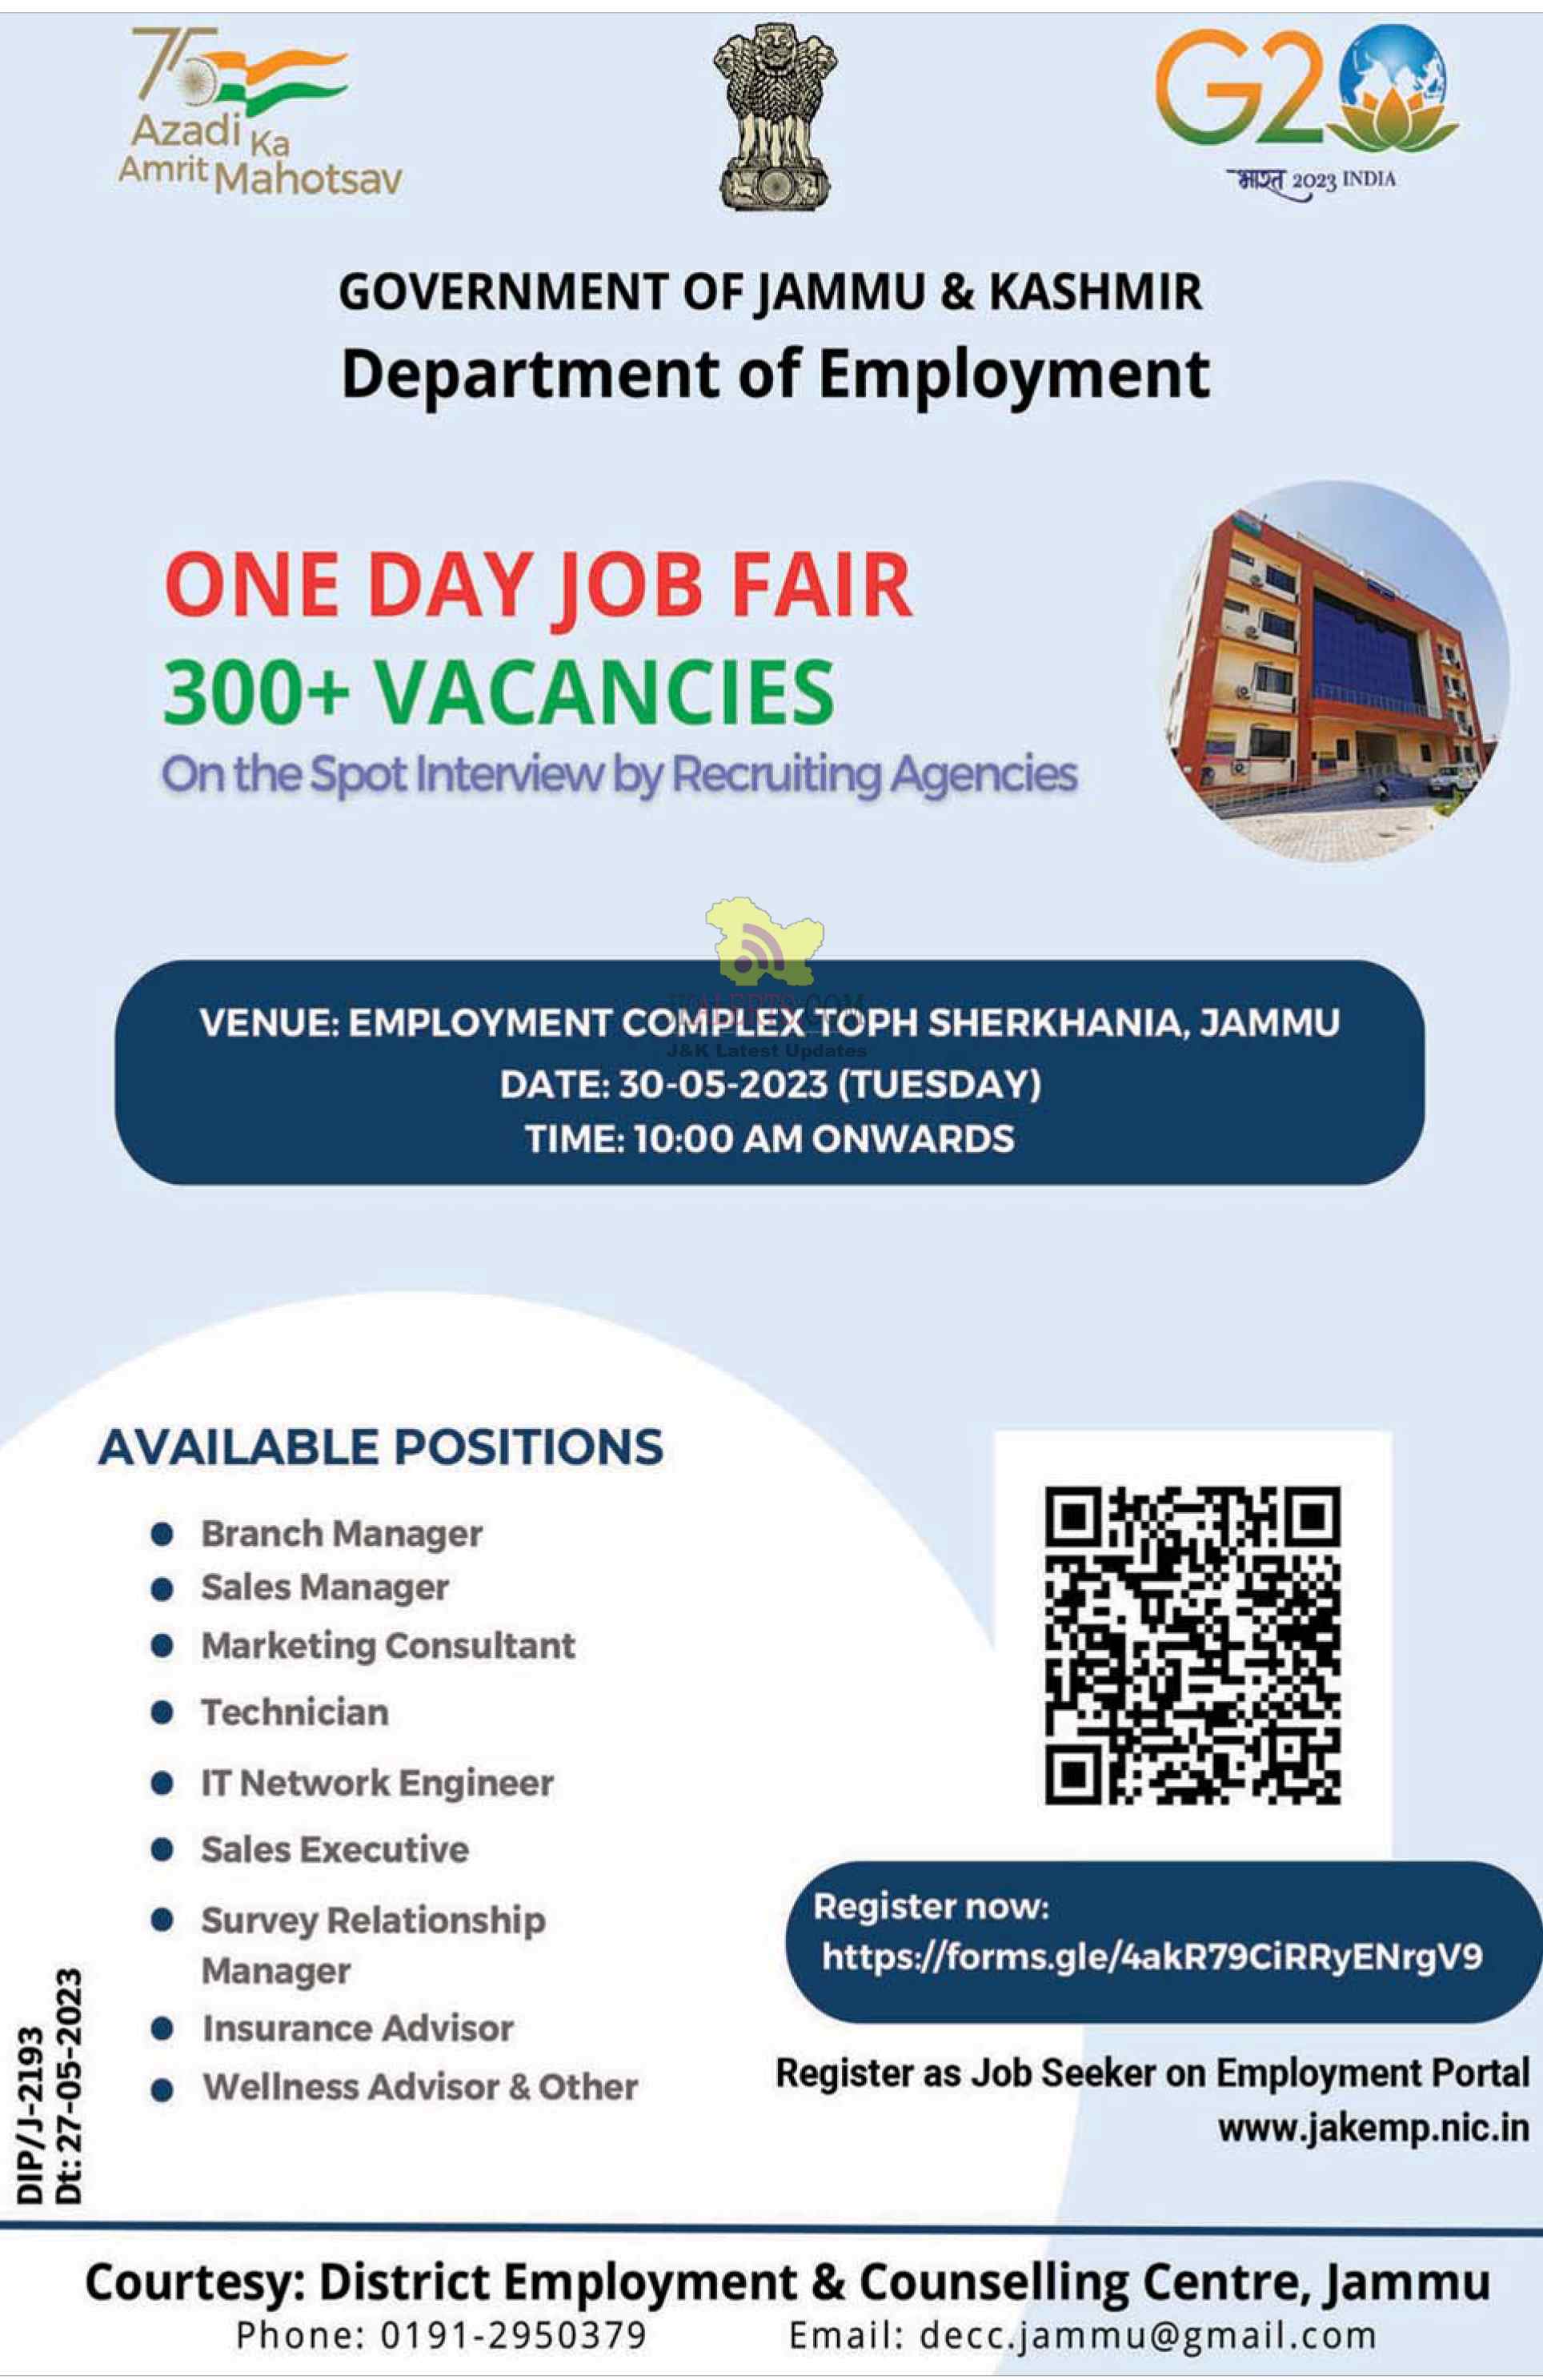 One Day Job Fair 300+ Vacancies Jammu.